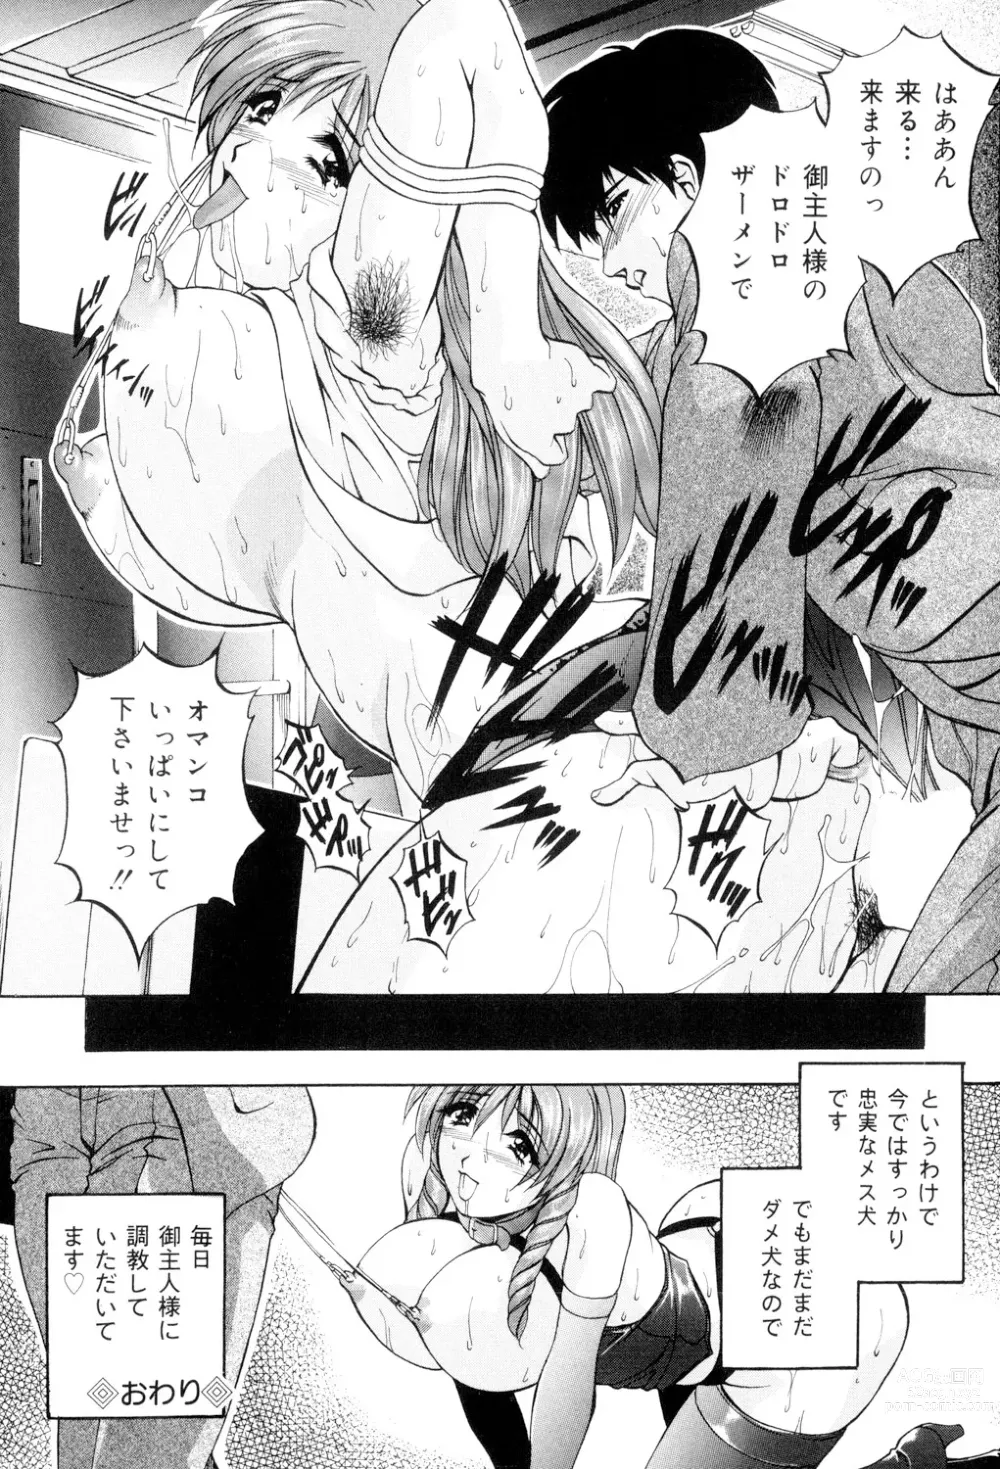 Page 167 of manga Aniyome no Himitsu